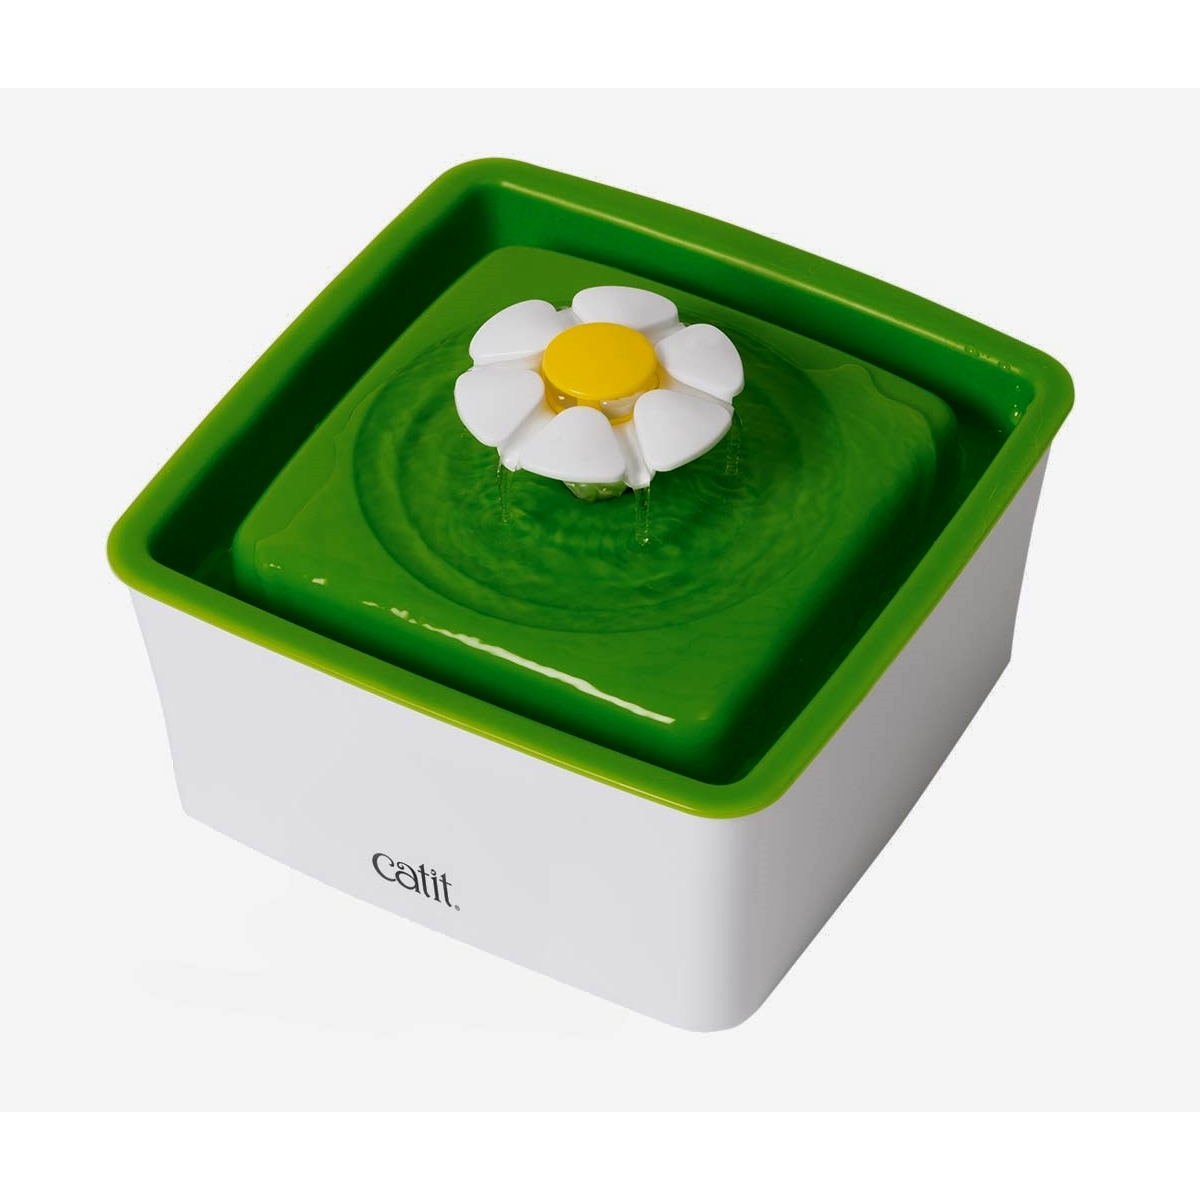 Catit 2.0 - Senses Flower Design Pet Cat Water Fountain Mini - 1.5 Litre image 0